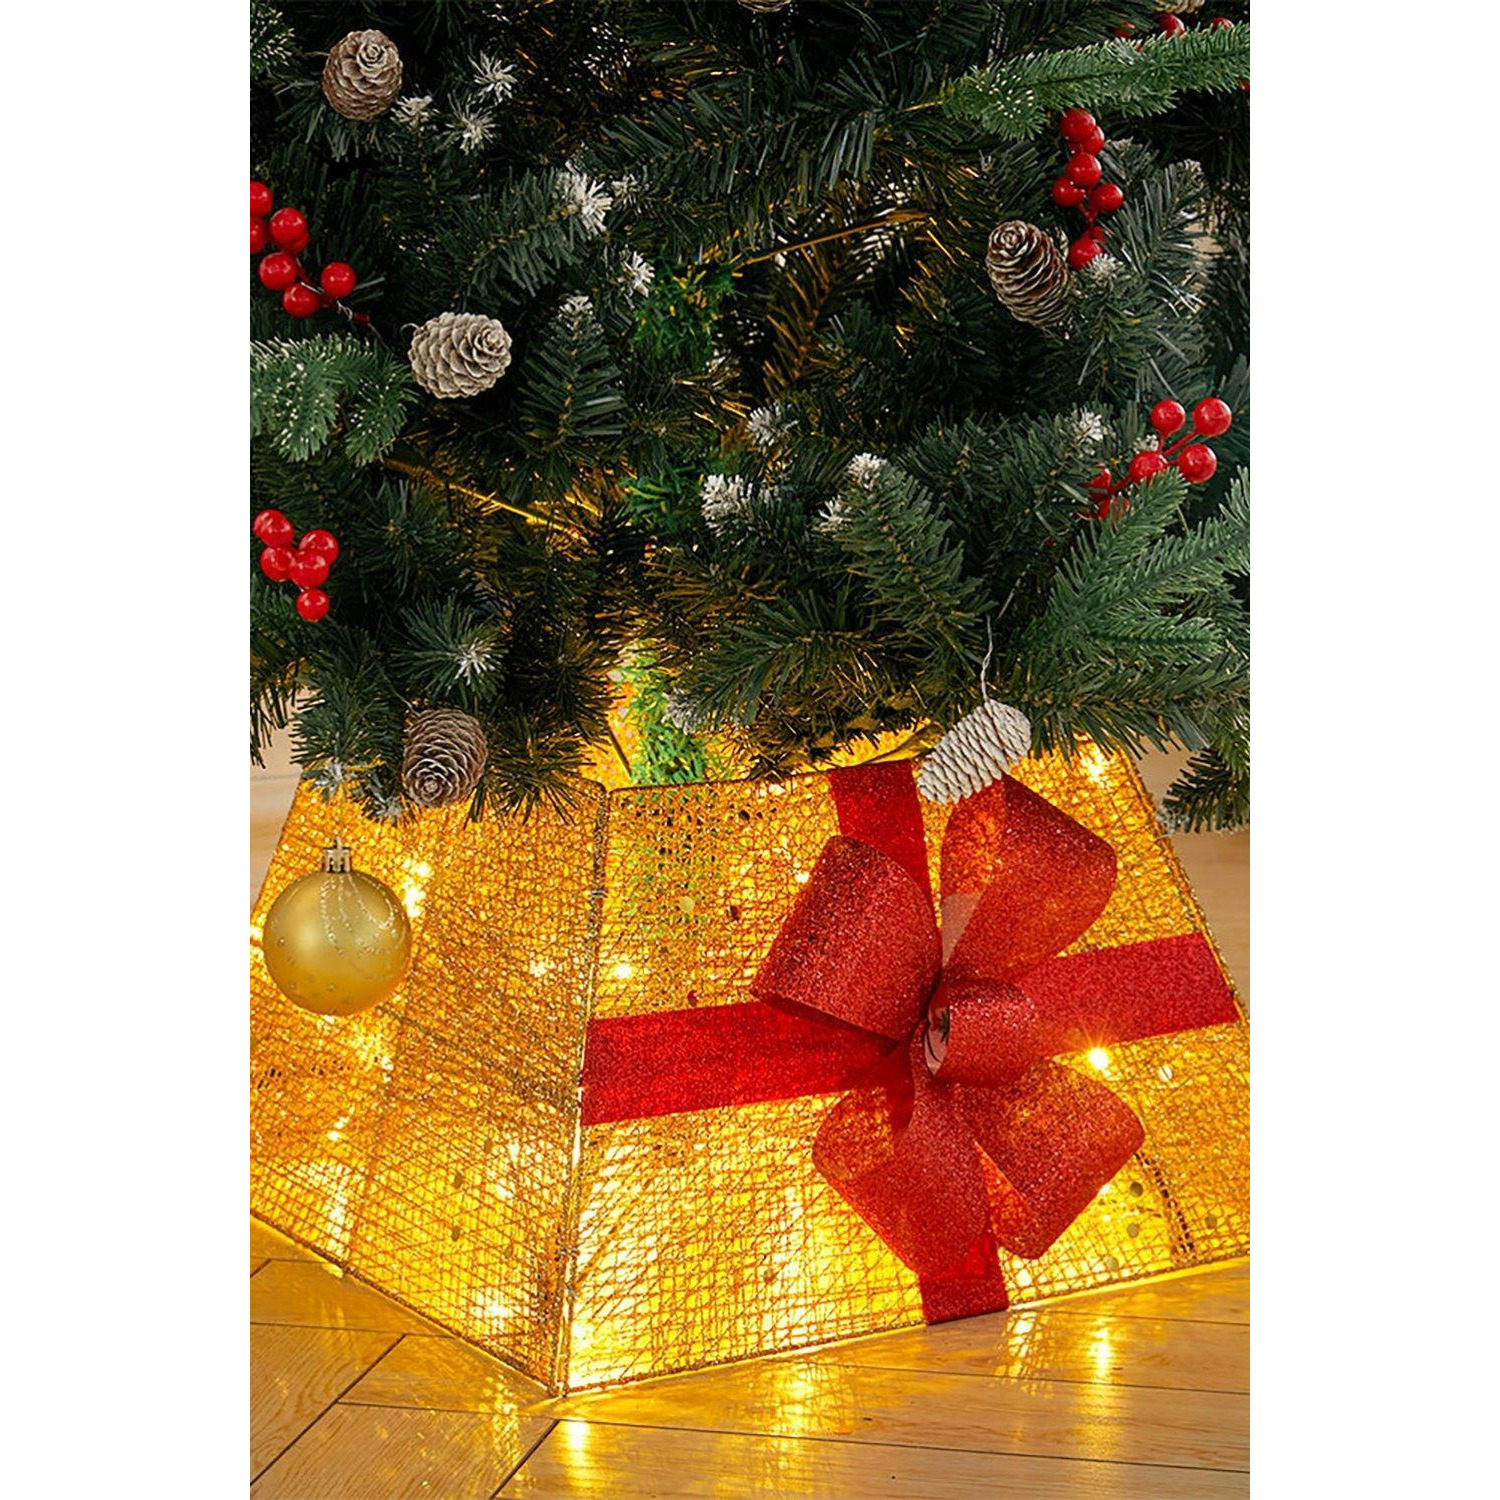 Square Christmas Tree Collar Basket Decor with Bow Tie - image 1